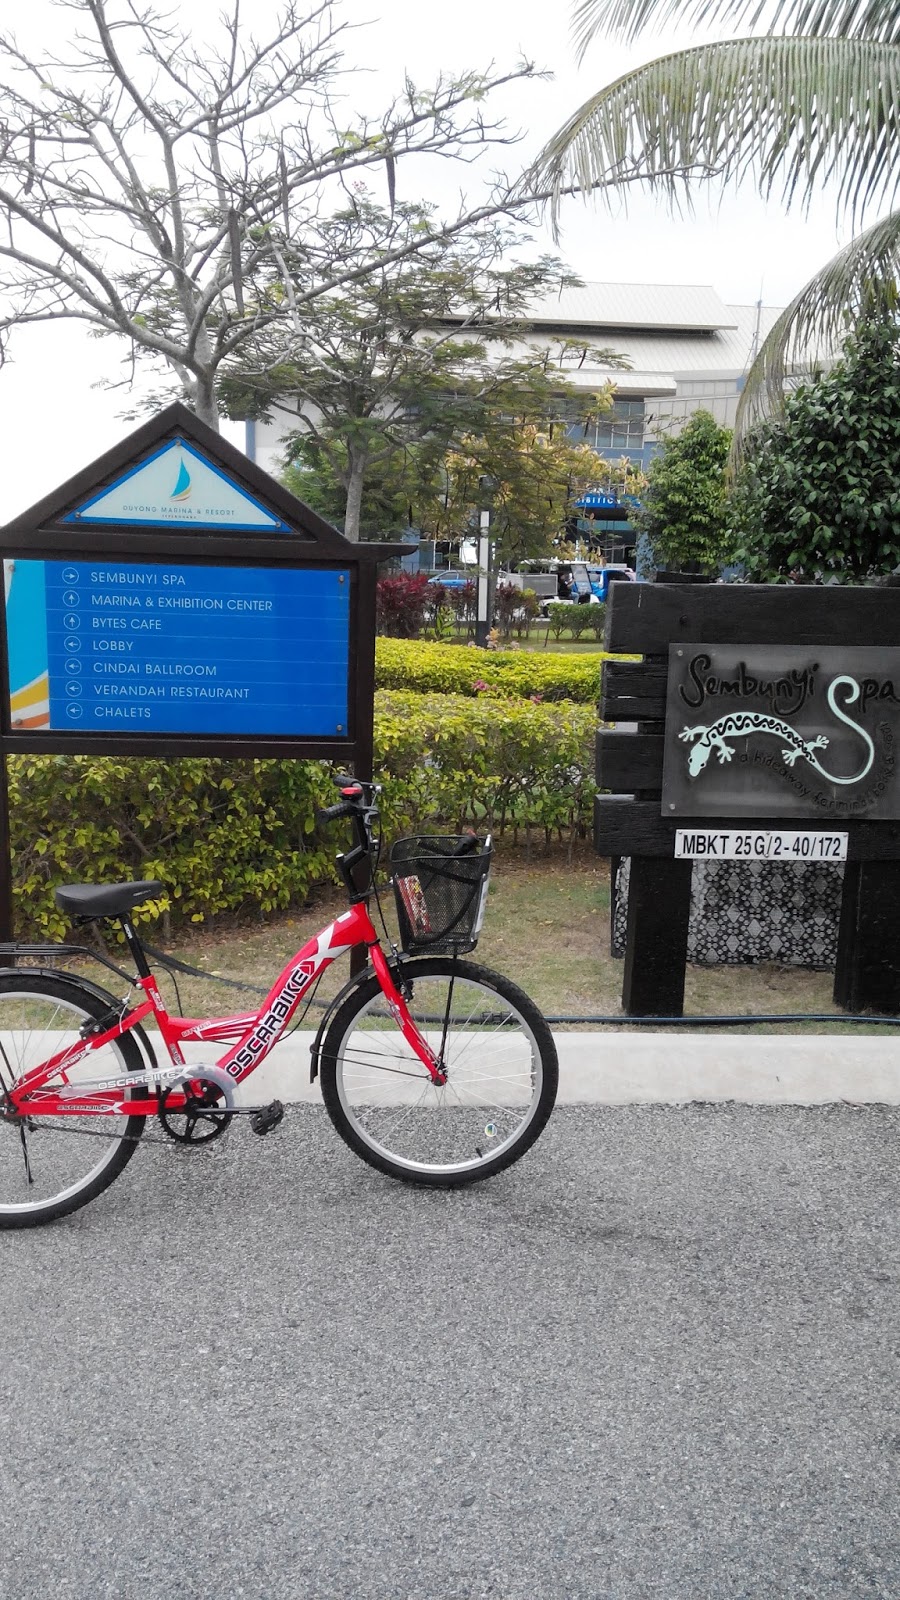 Terengganuku Basikal Sewa ( Free Ride untuk tetamu WR Residence )